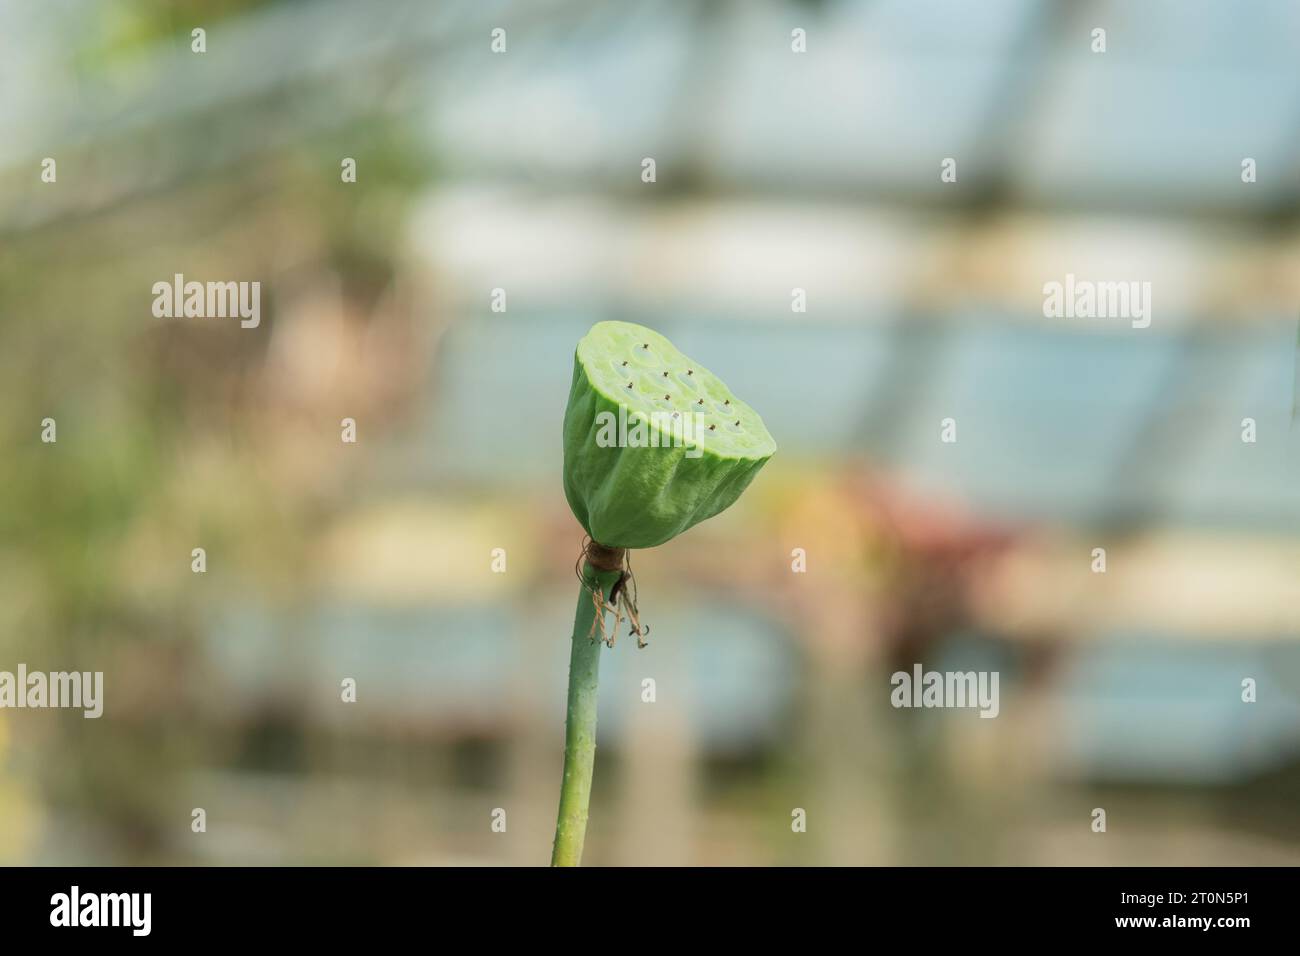 unripe lotus fruit against blurred greenhouse background Stock Photo